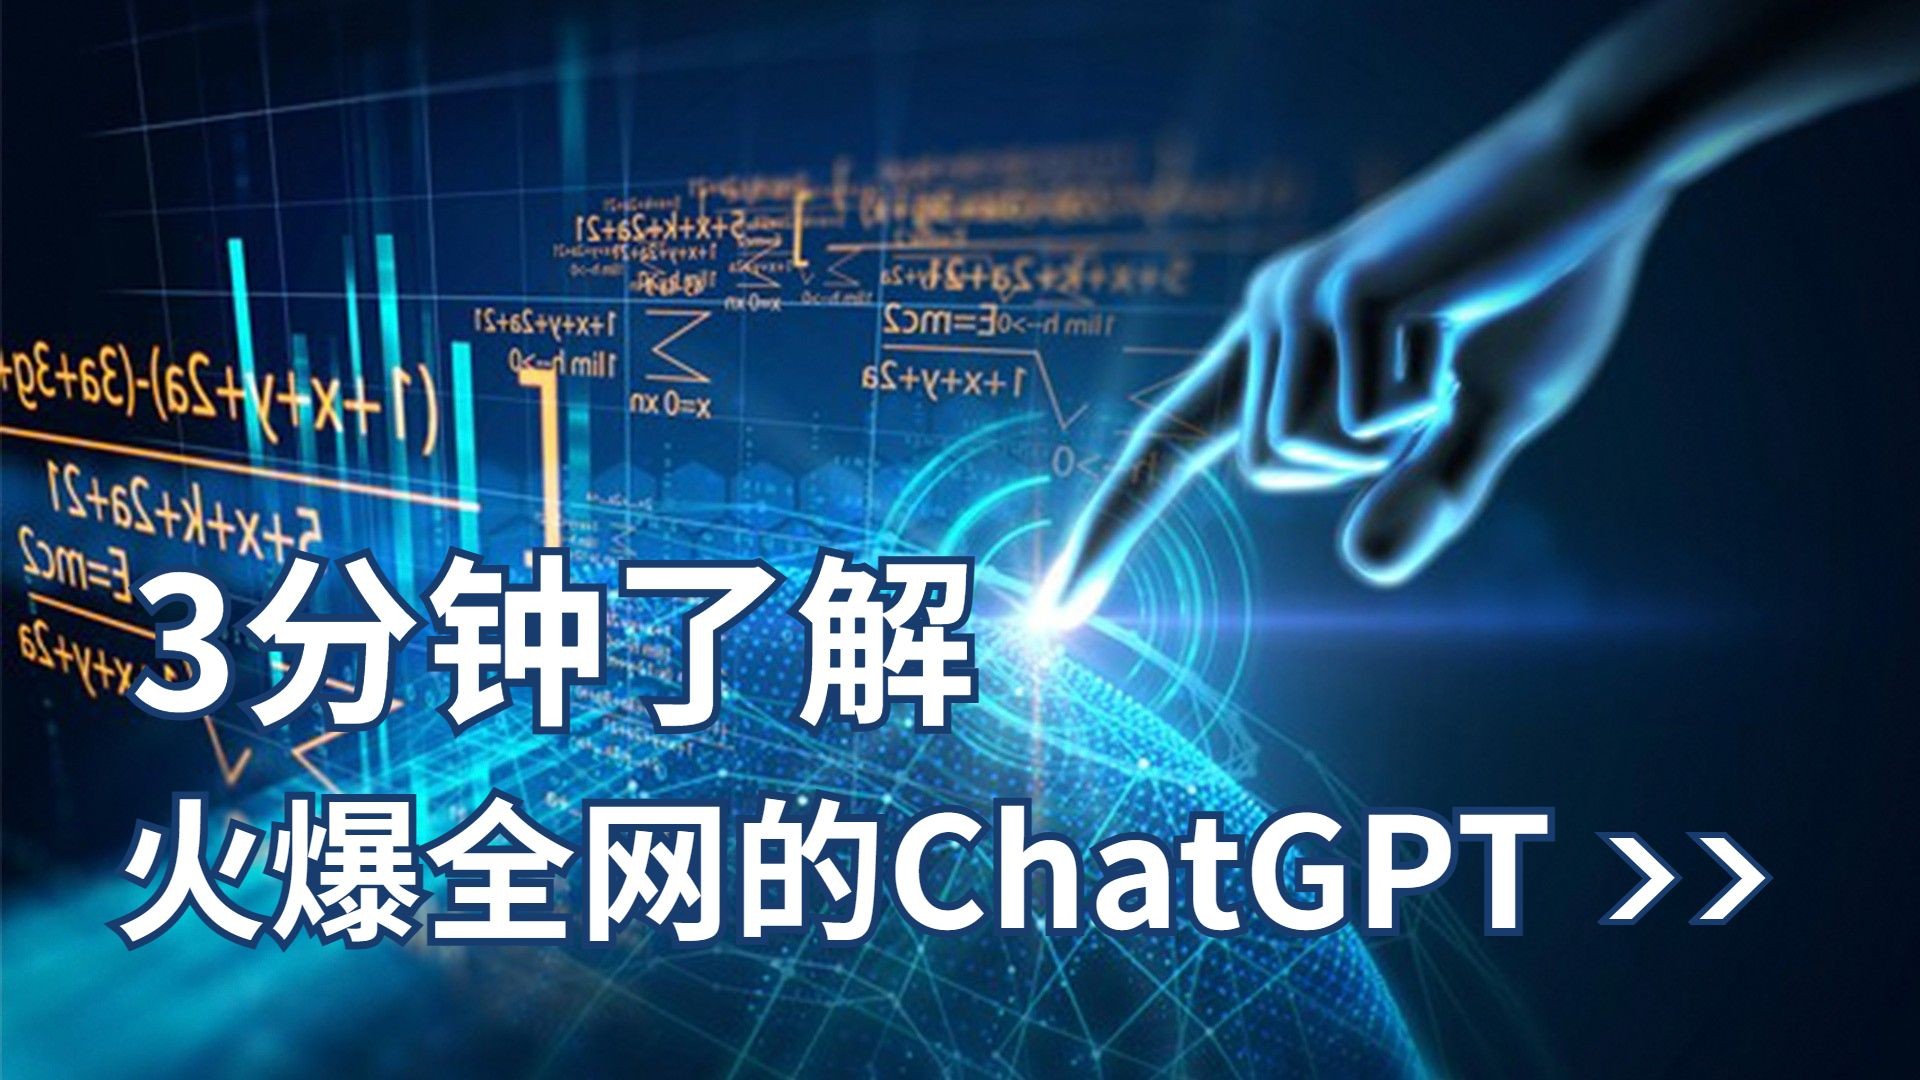 ChatGPT科普横版视频封面预览效果